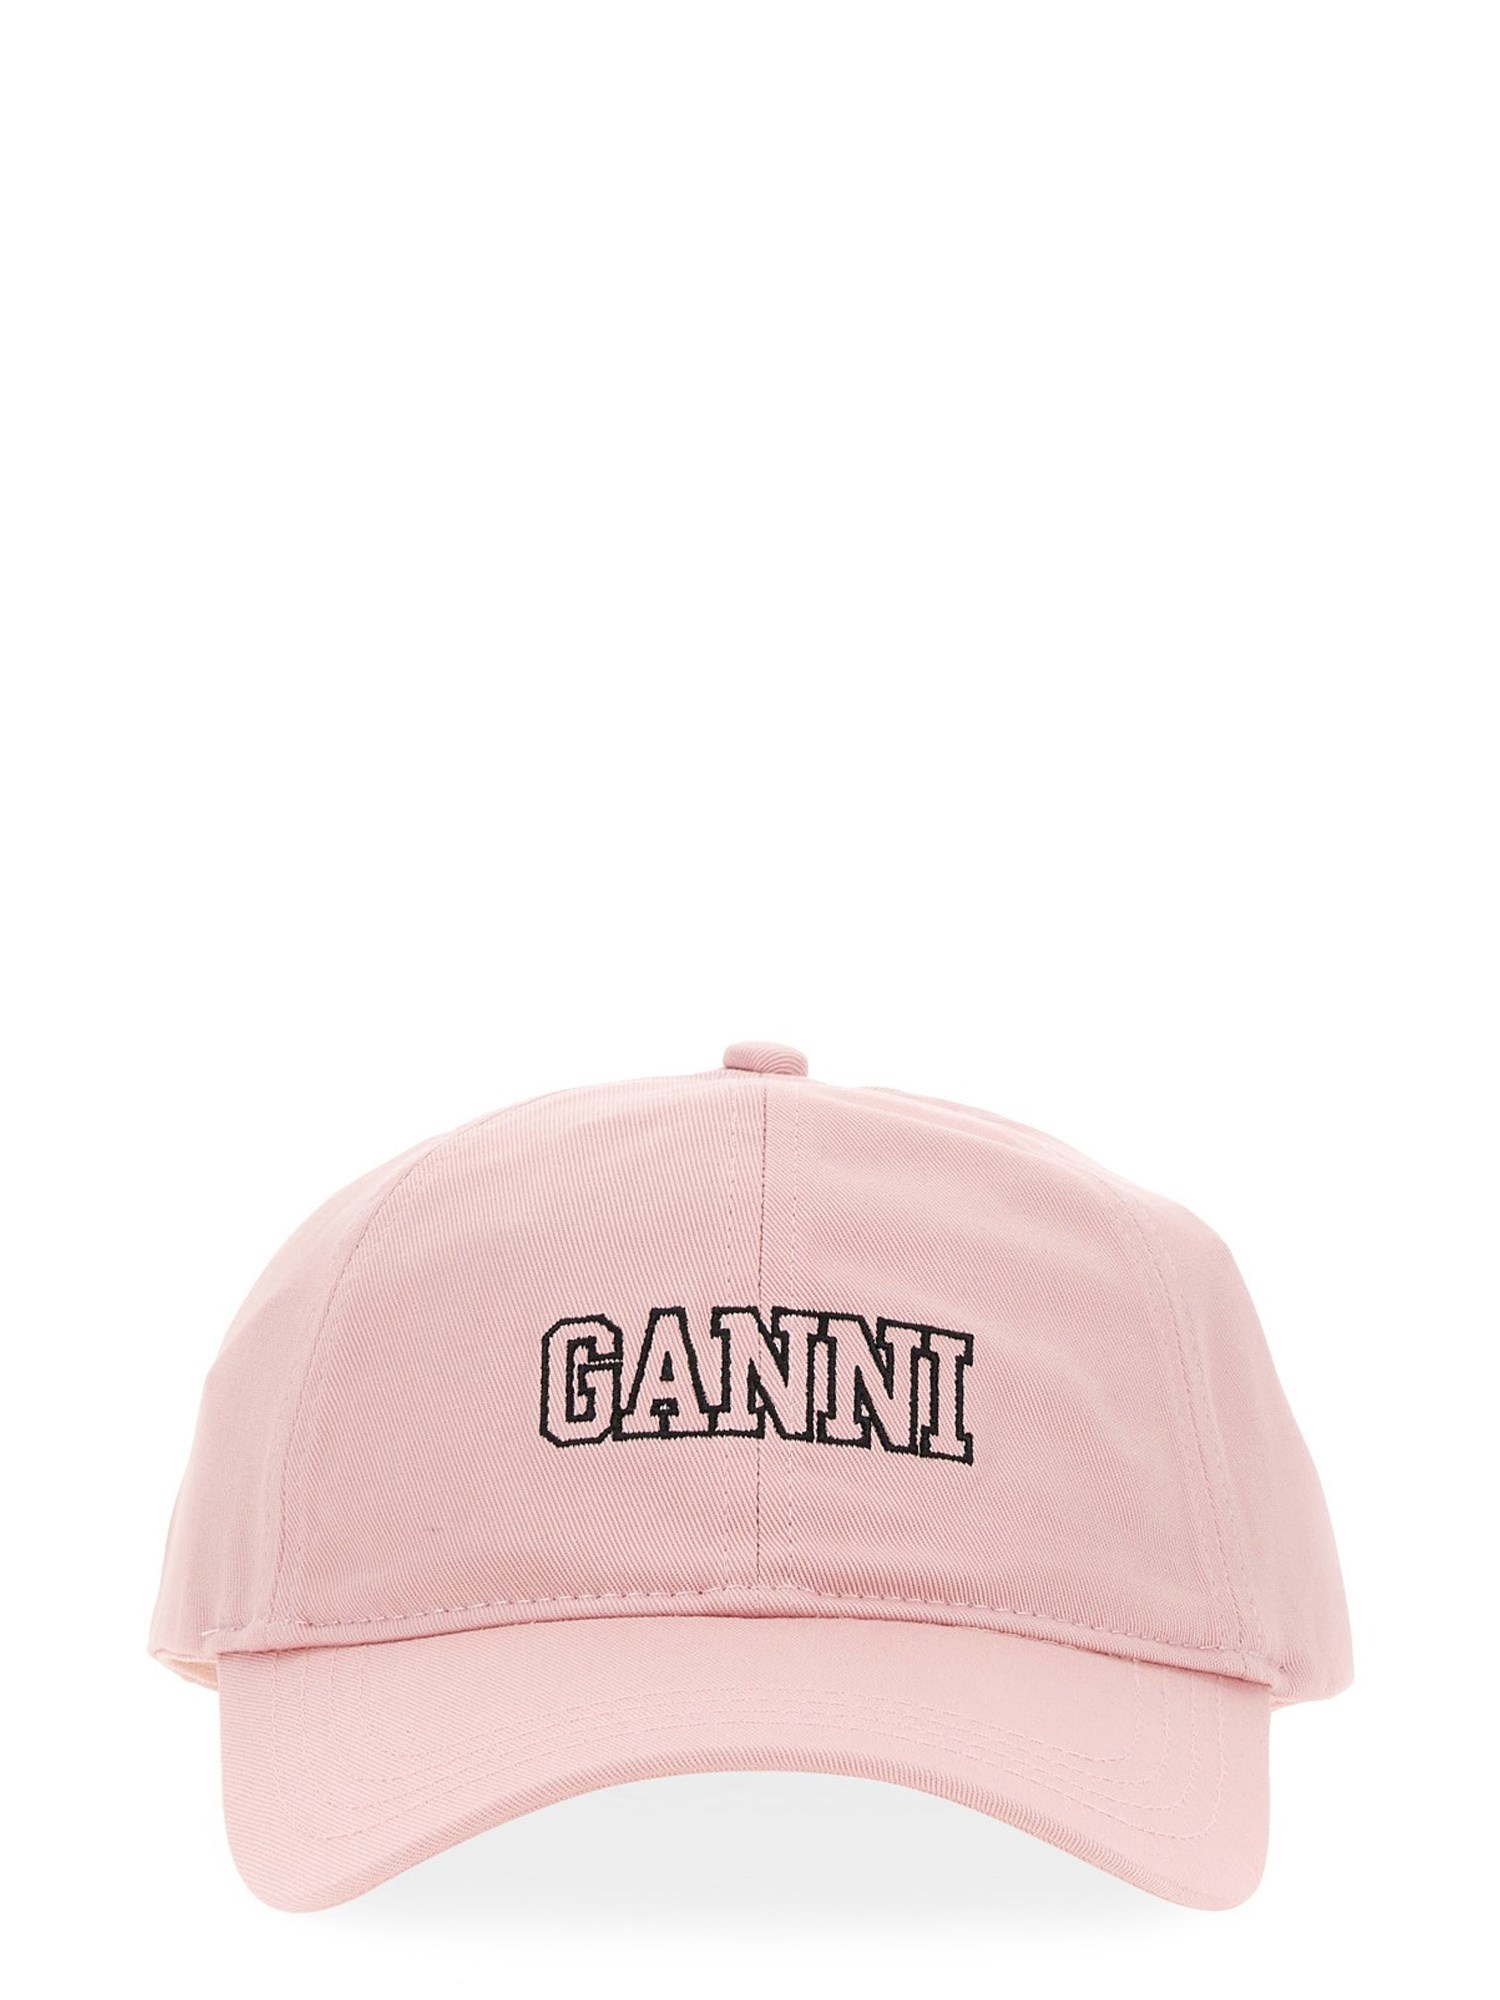 ganni baseball hat with logo